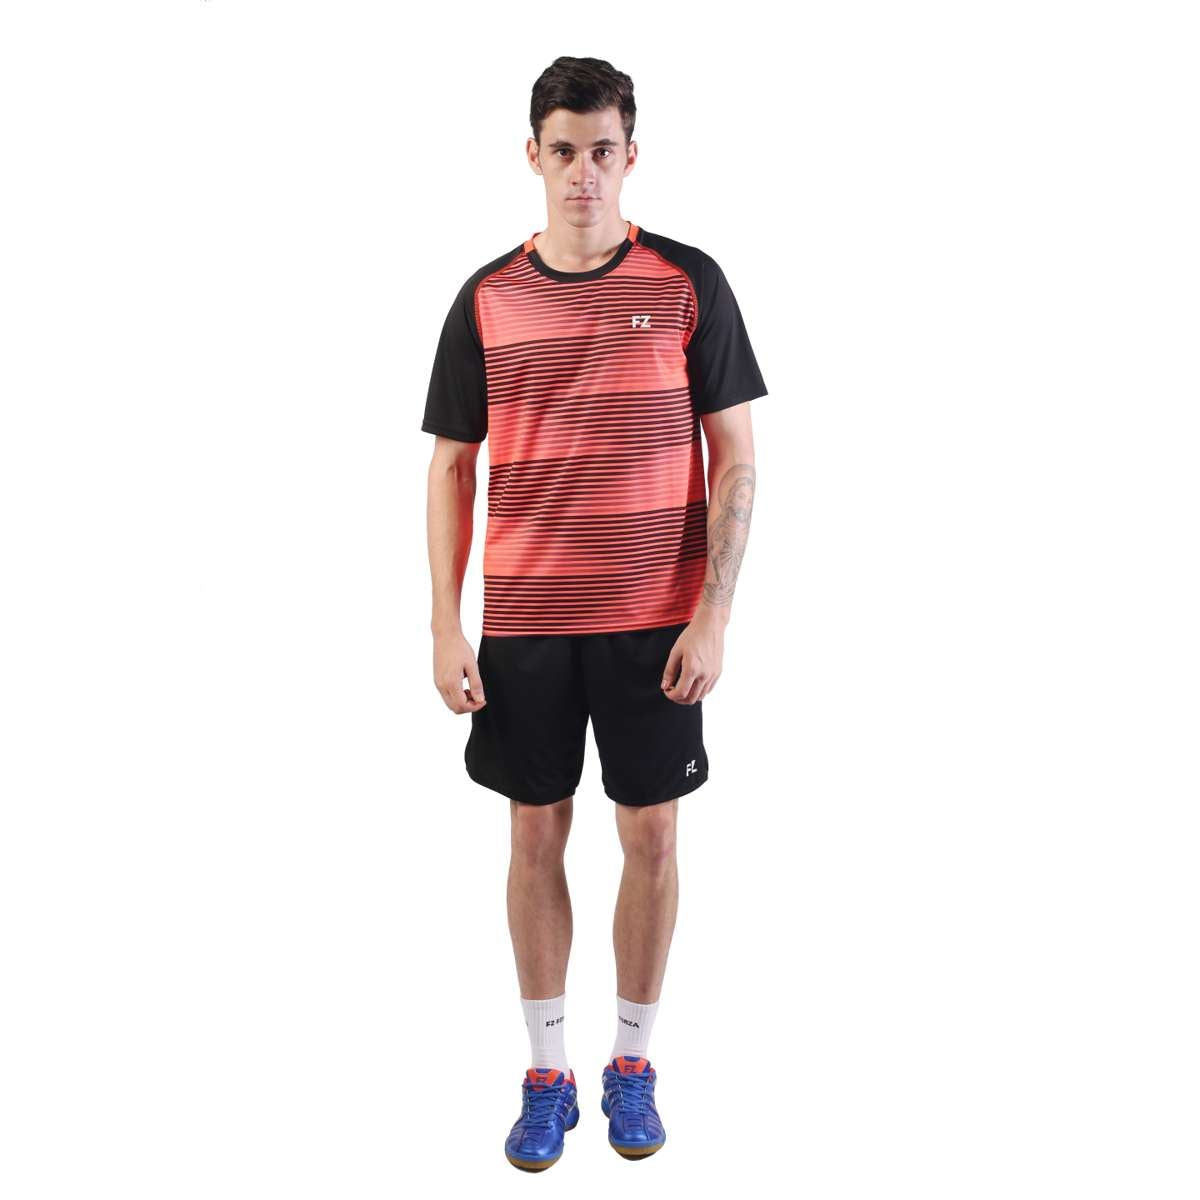 FZ Forza Dubai Black Orange Badminton T-Shirt